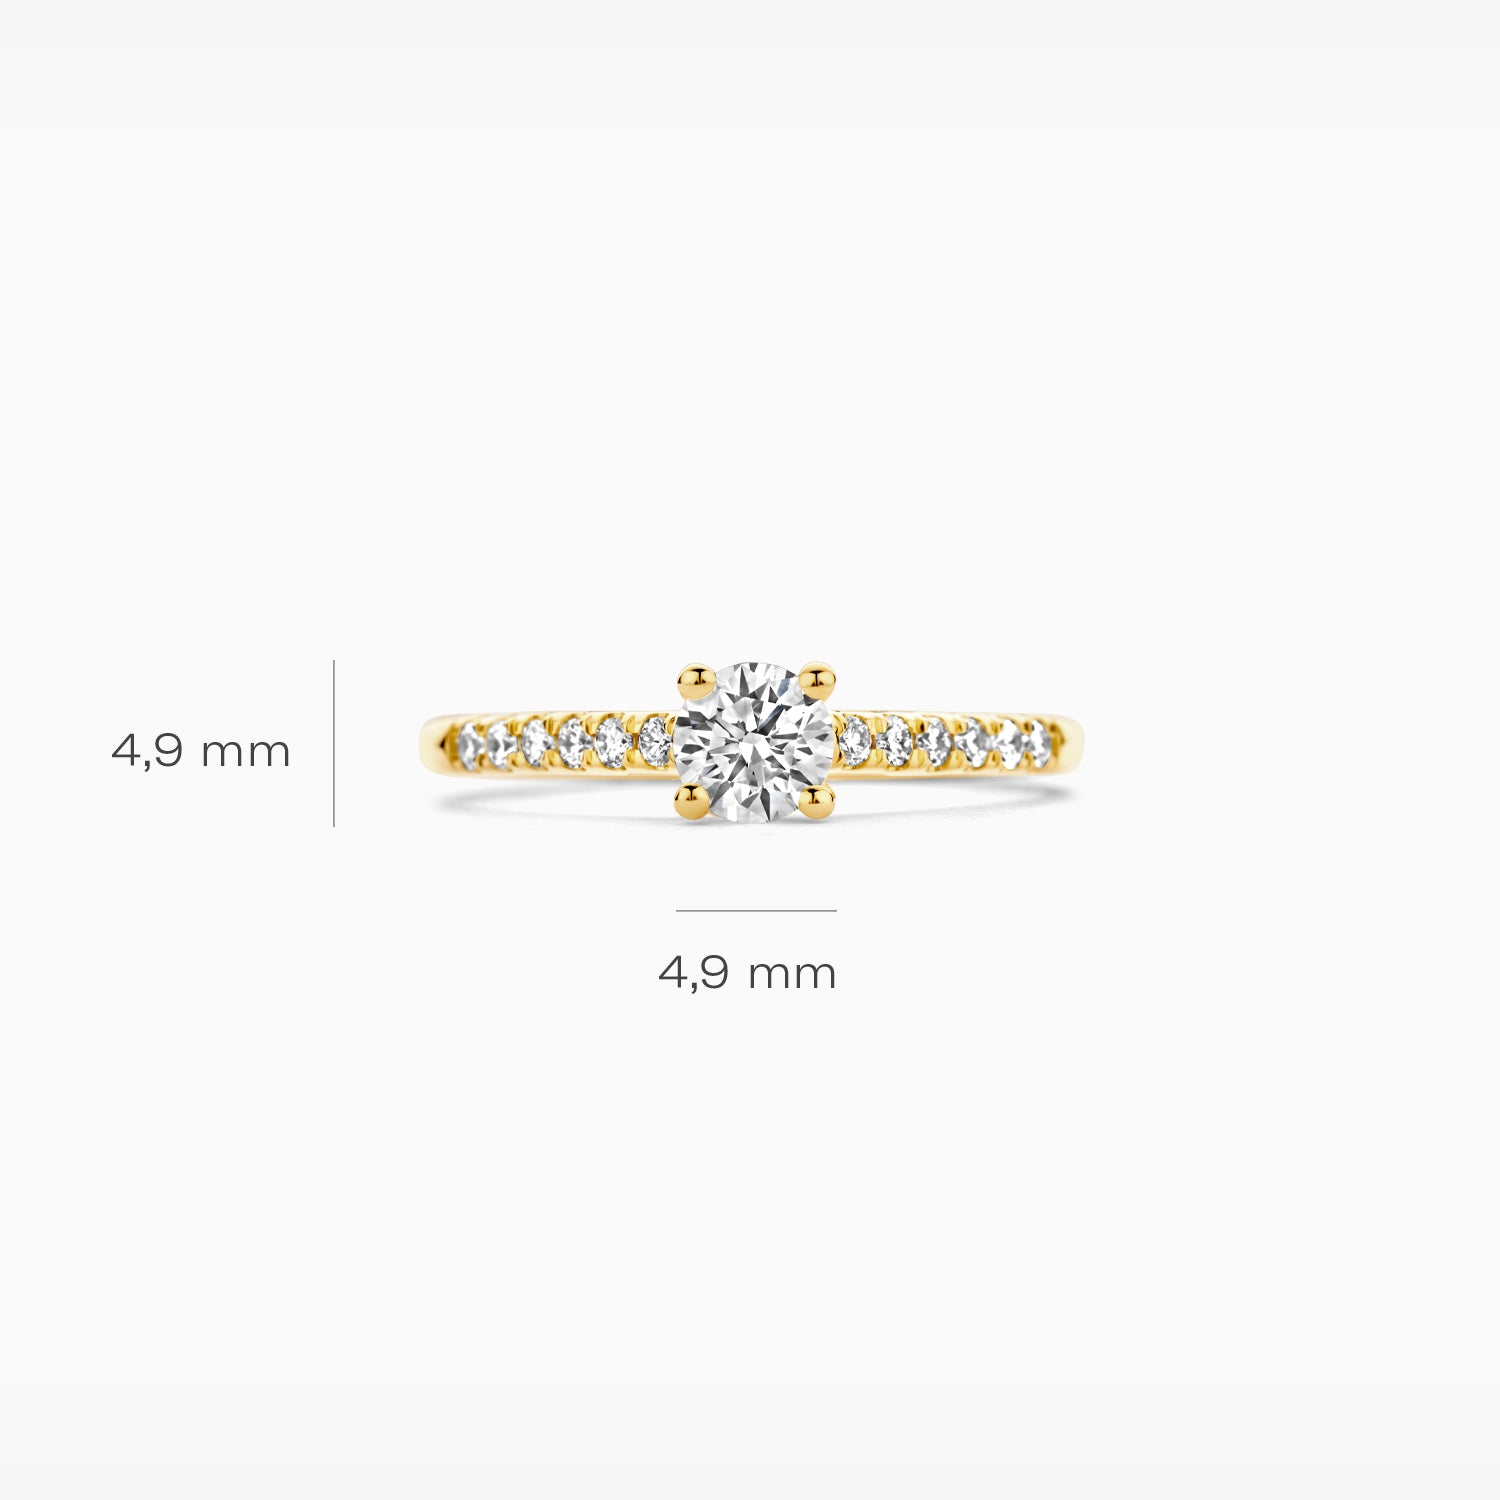 Lab diamonds Ringe LG1006Y - 585er Gelbgold